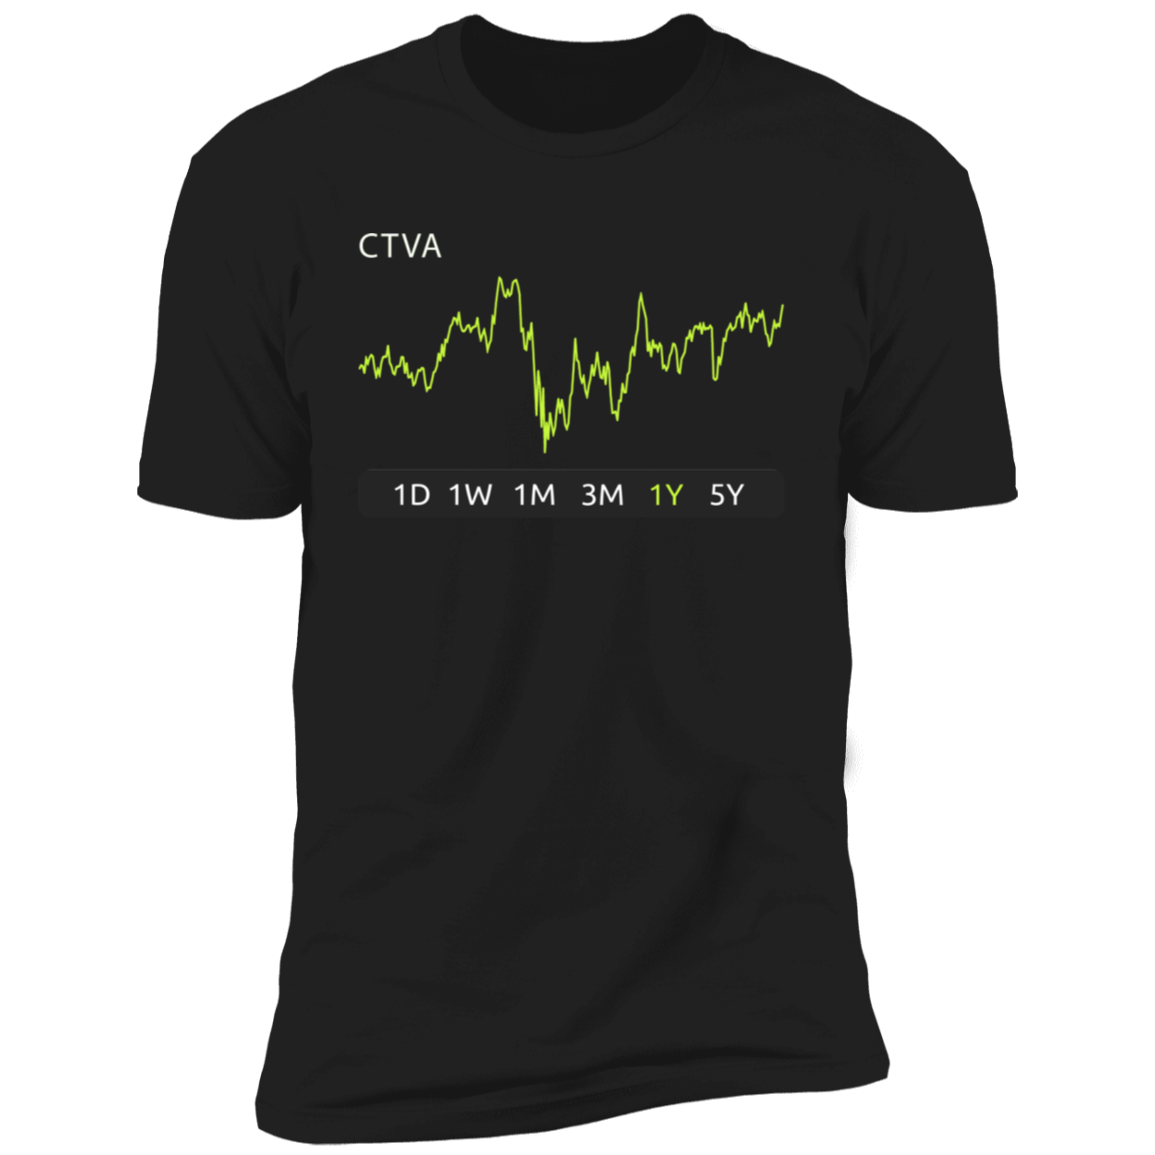 CTVA Stock 1y Premium T-Shirt